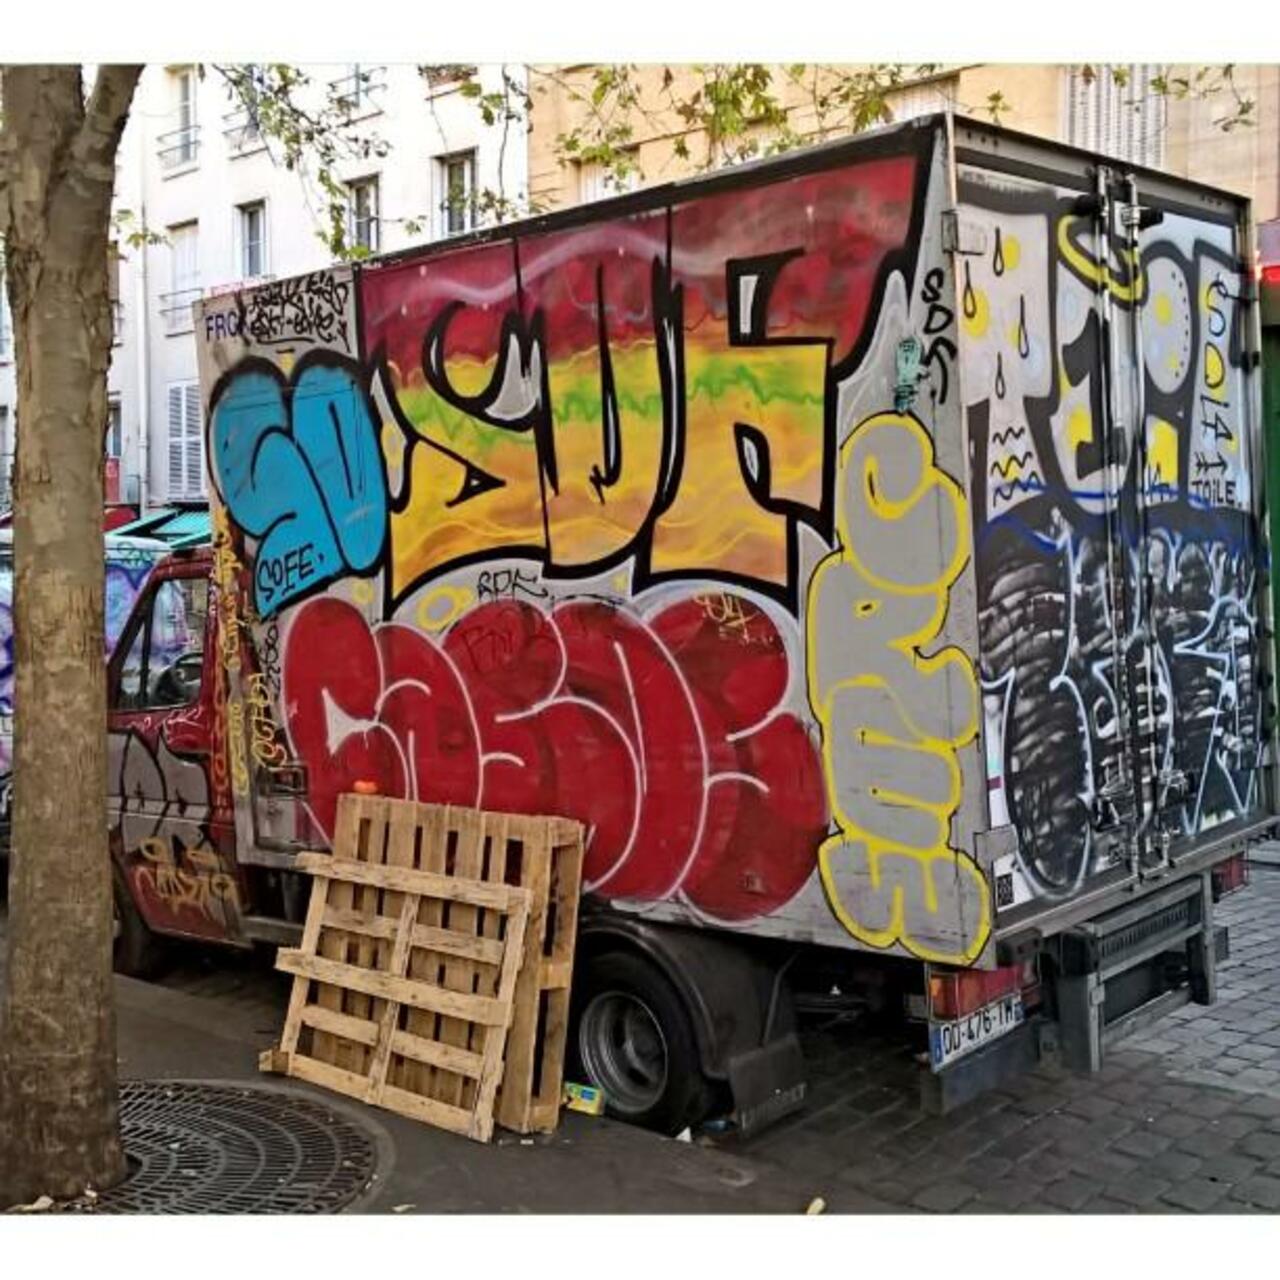 #Paris #graffiti photo by @maxdimontemarciano http://ift.tt/1hcBKHj #StreetArt https://t.co/j4uHvx5qnB